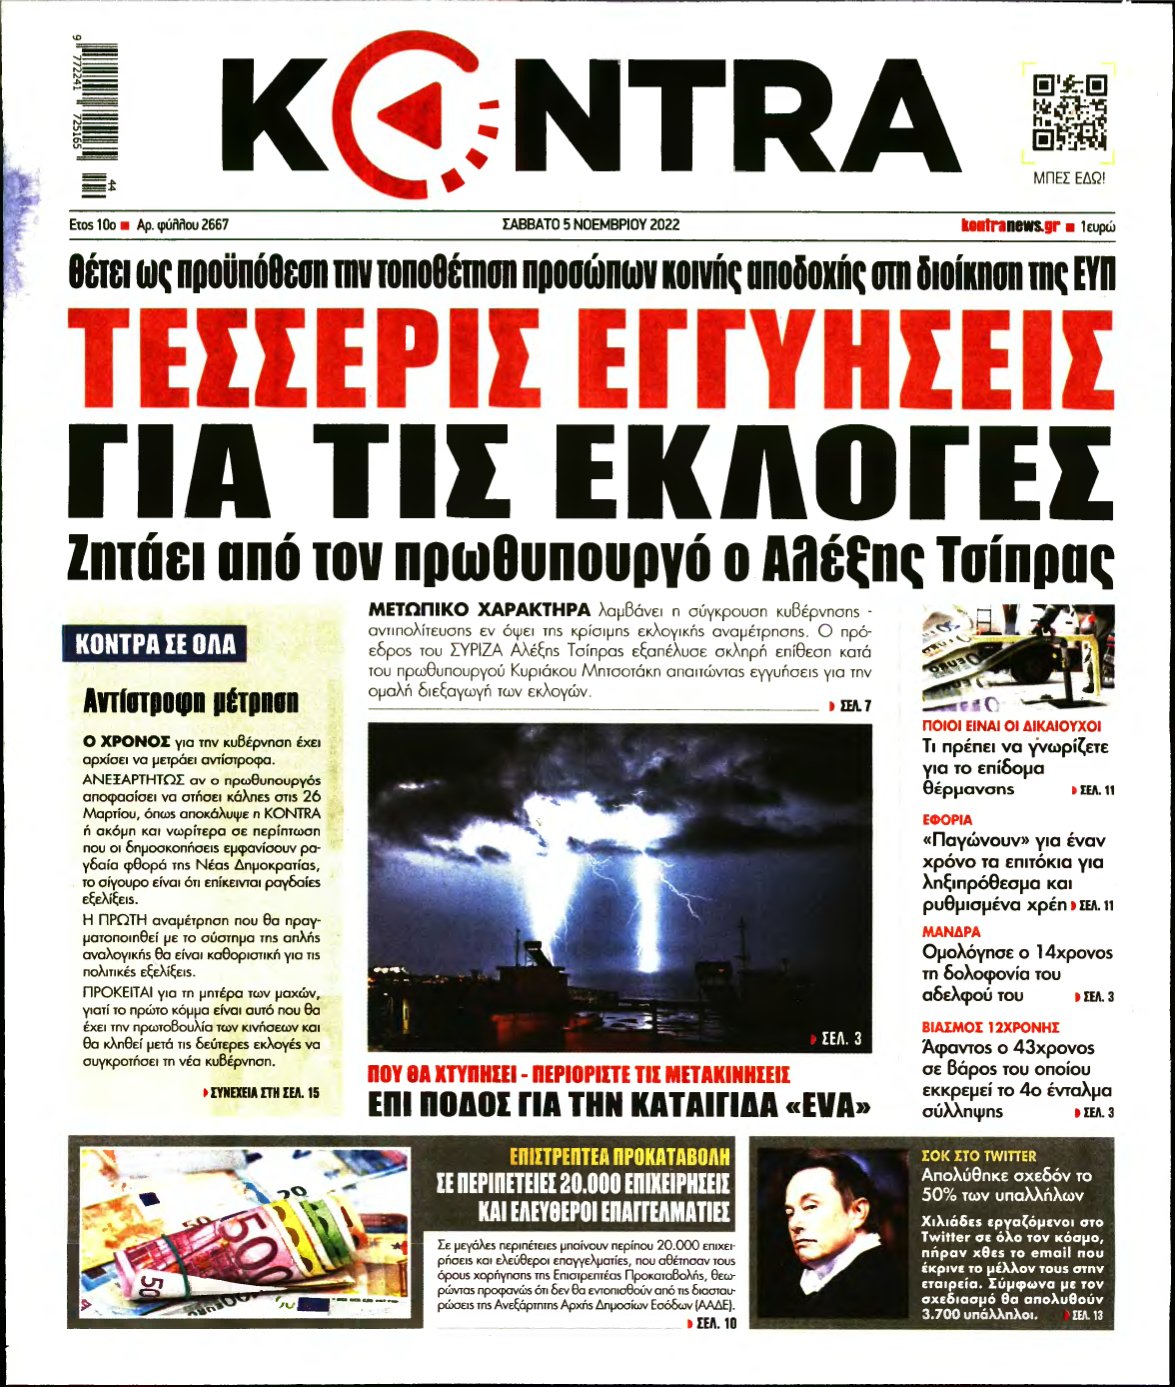 KONTRA NEWS – 05/11/2022